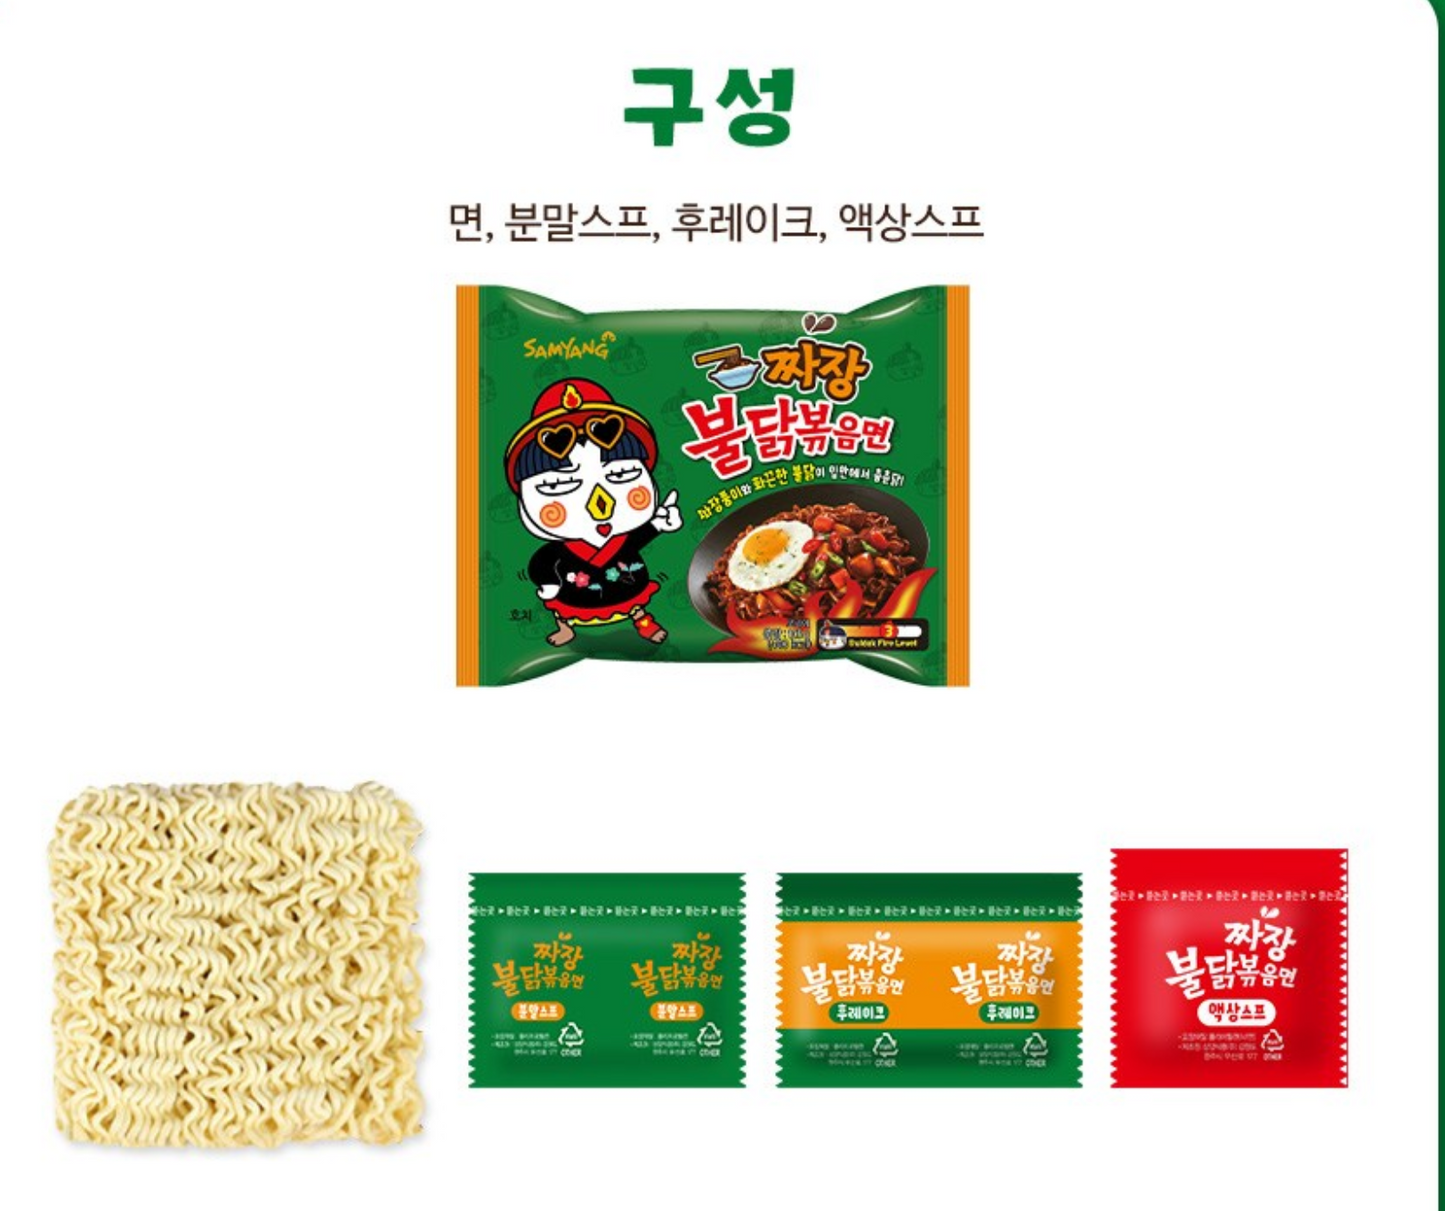 Samyang Jjajang Hot Chicken Ramen (삼양 짜장불닭볶음면)